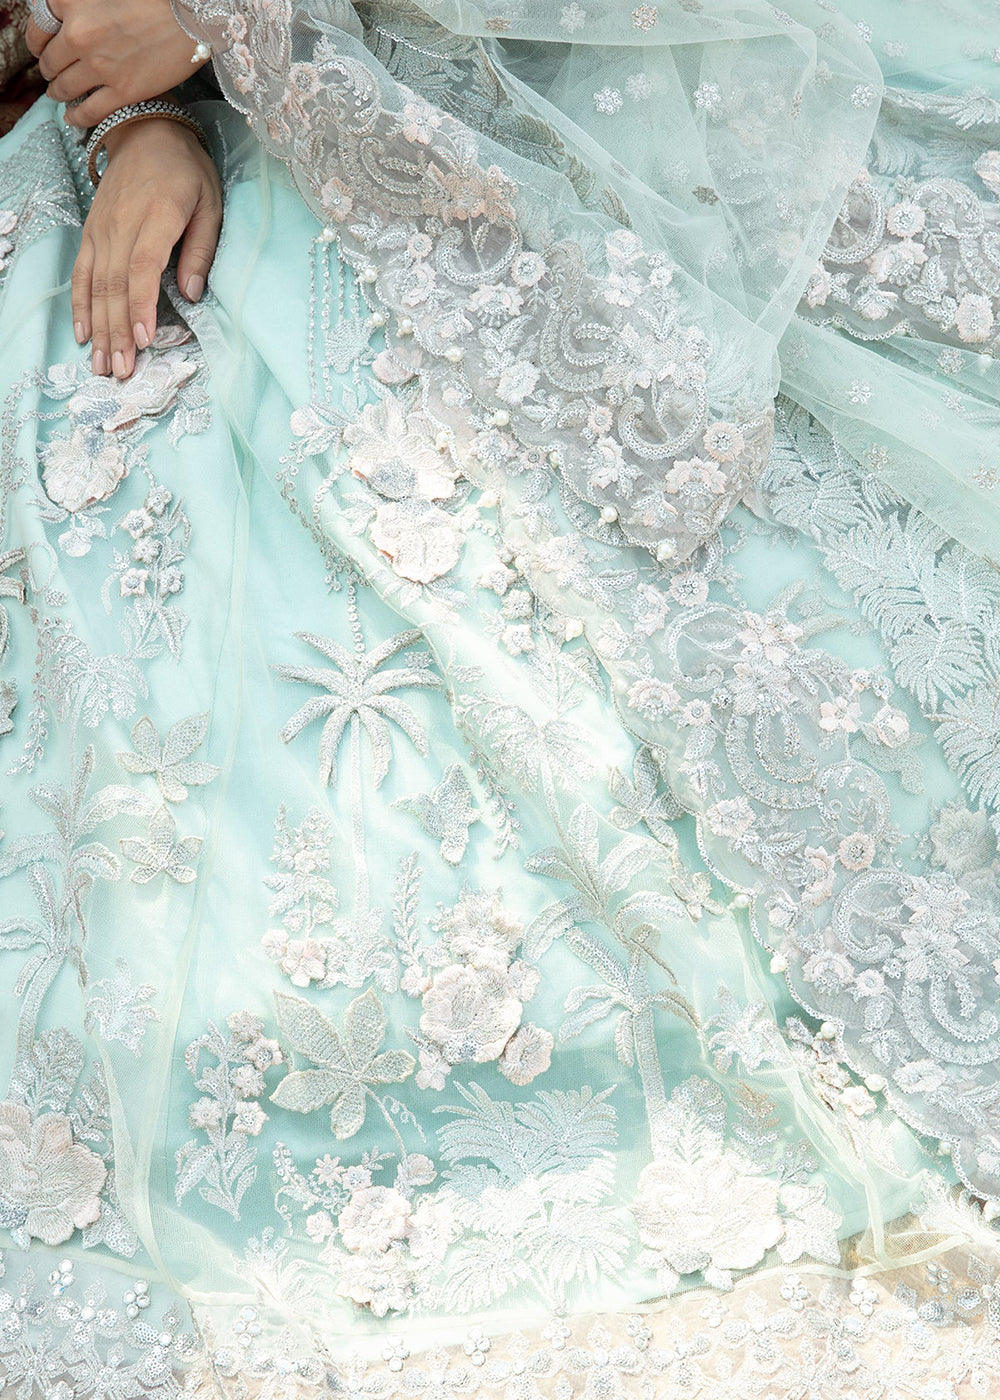 Buy Now Sea Green Pakistani Maxi Dress| Imrozia Serena Mehram Brides '23 | SB-09 - Arwah Online in USA, UK, Canada & Worldwide at Empress Clothing. 